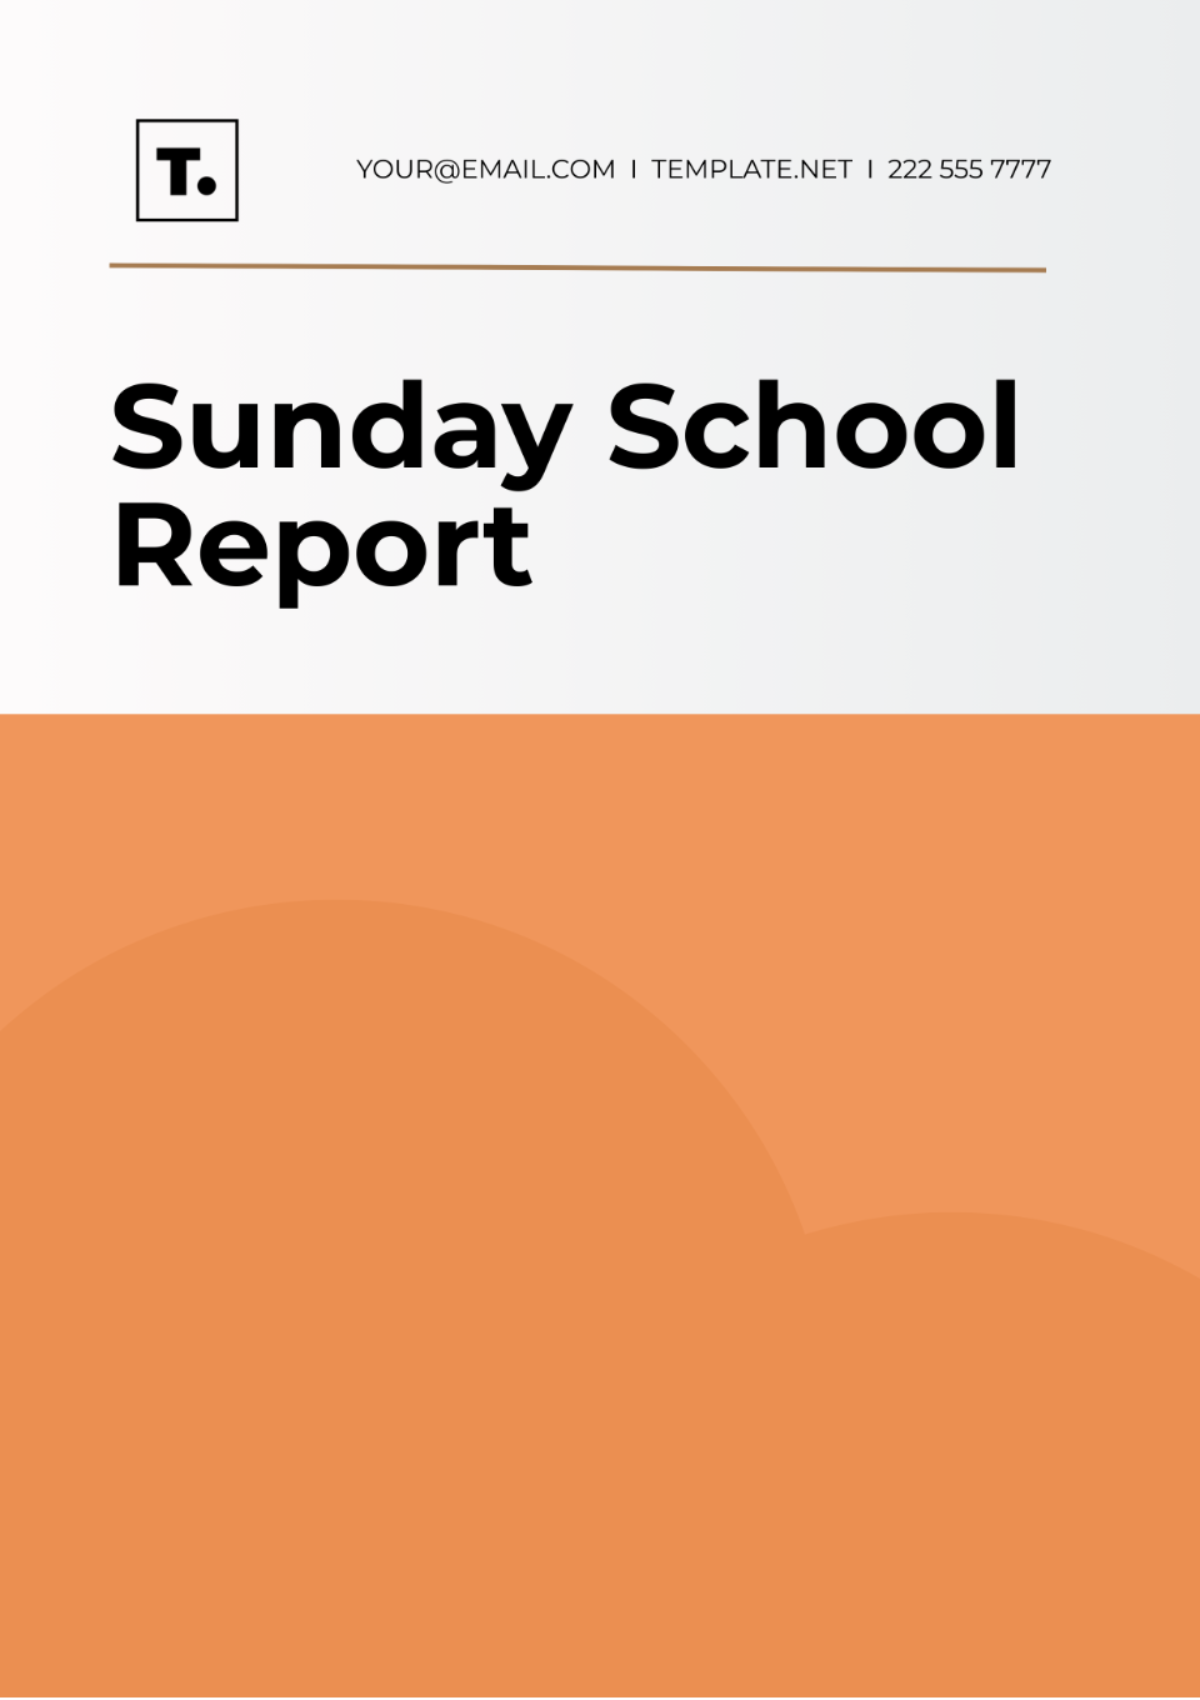 Sunday School Report Template